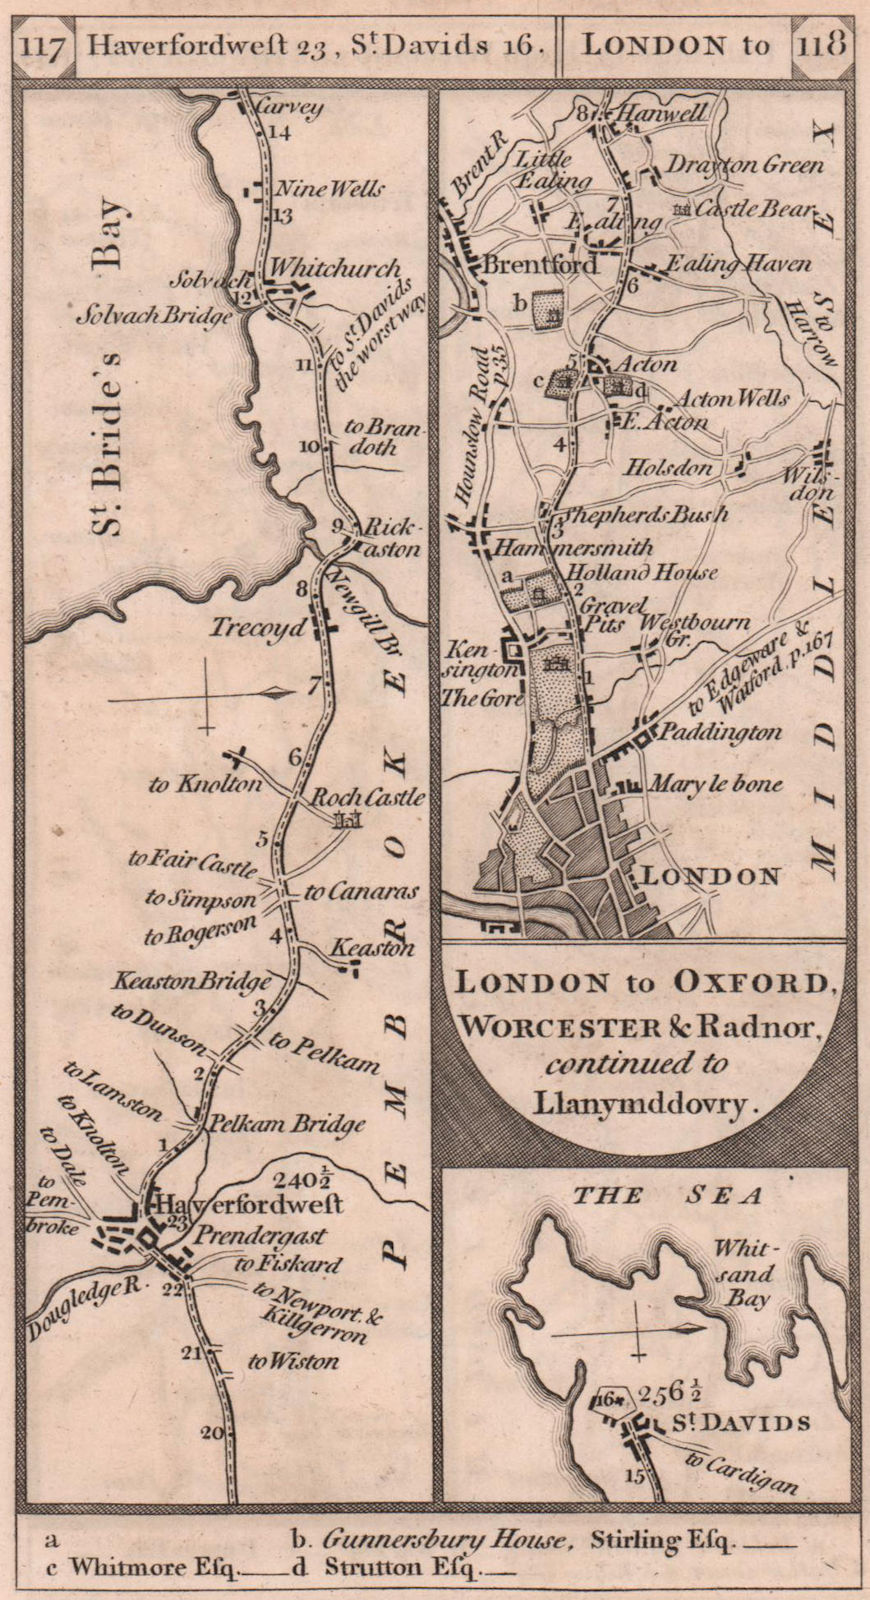 Associate Product Haverfordwest-St. David's. Kensington-Ealing road strip map PATERSON 1803